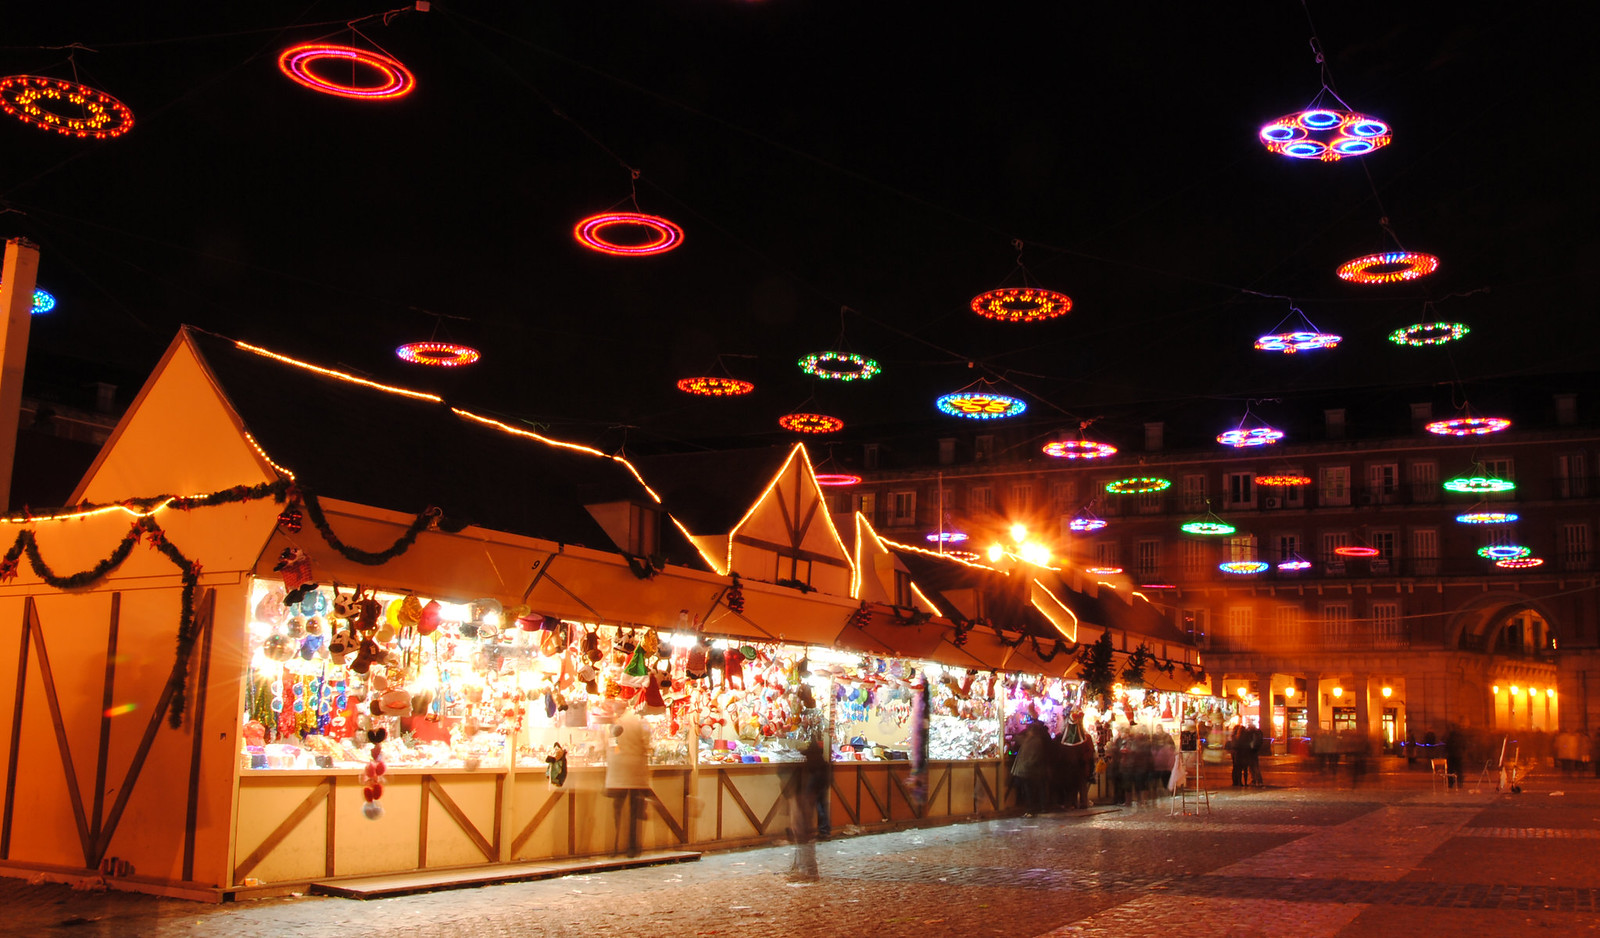 Mercados navideños en España: Plaza mayor de Madrid